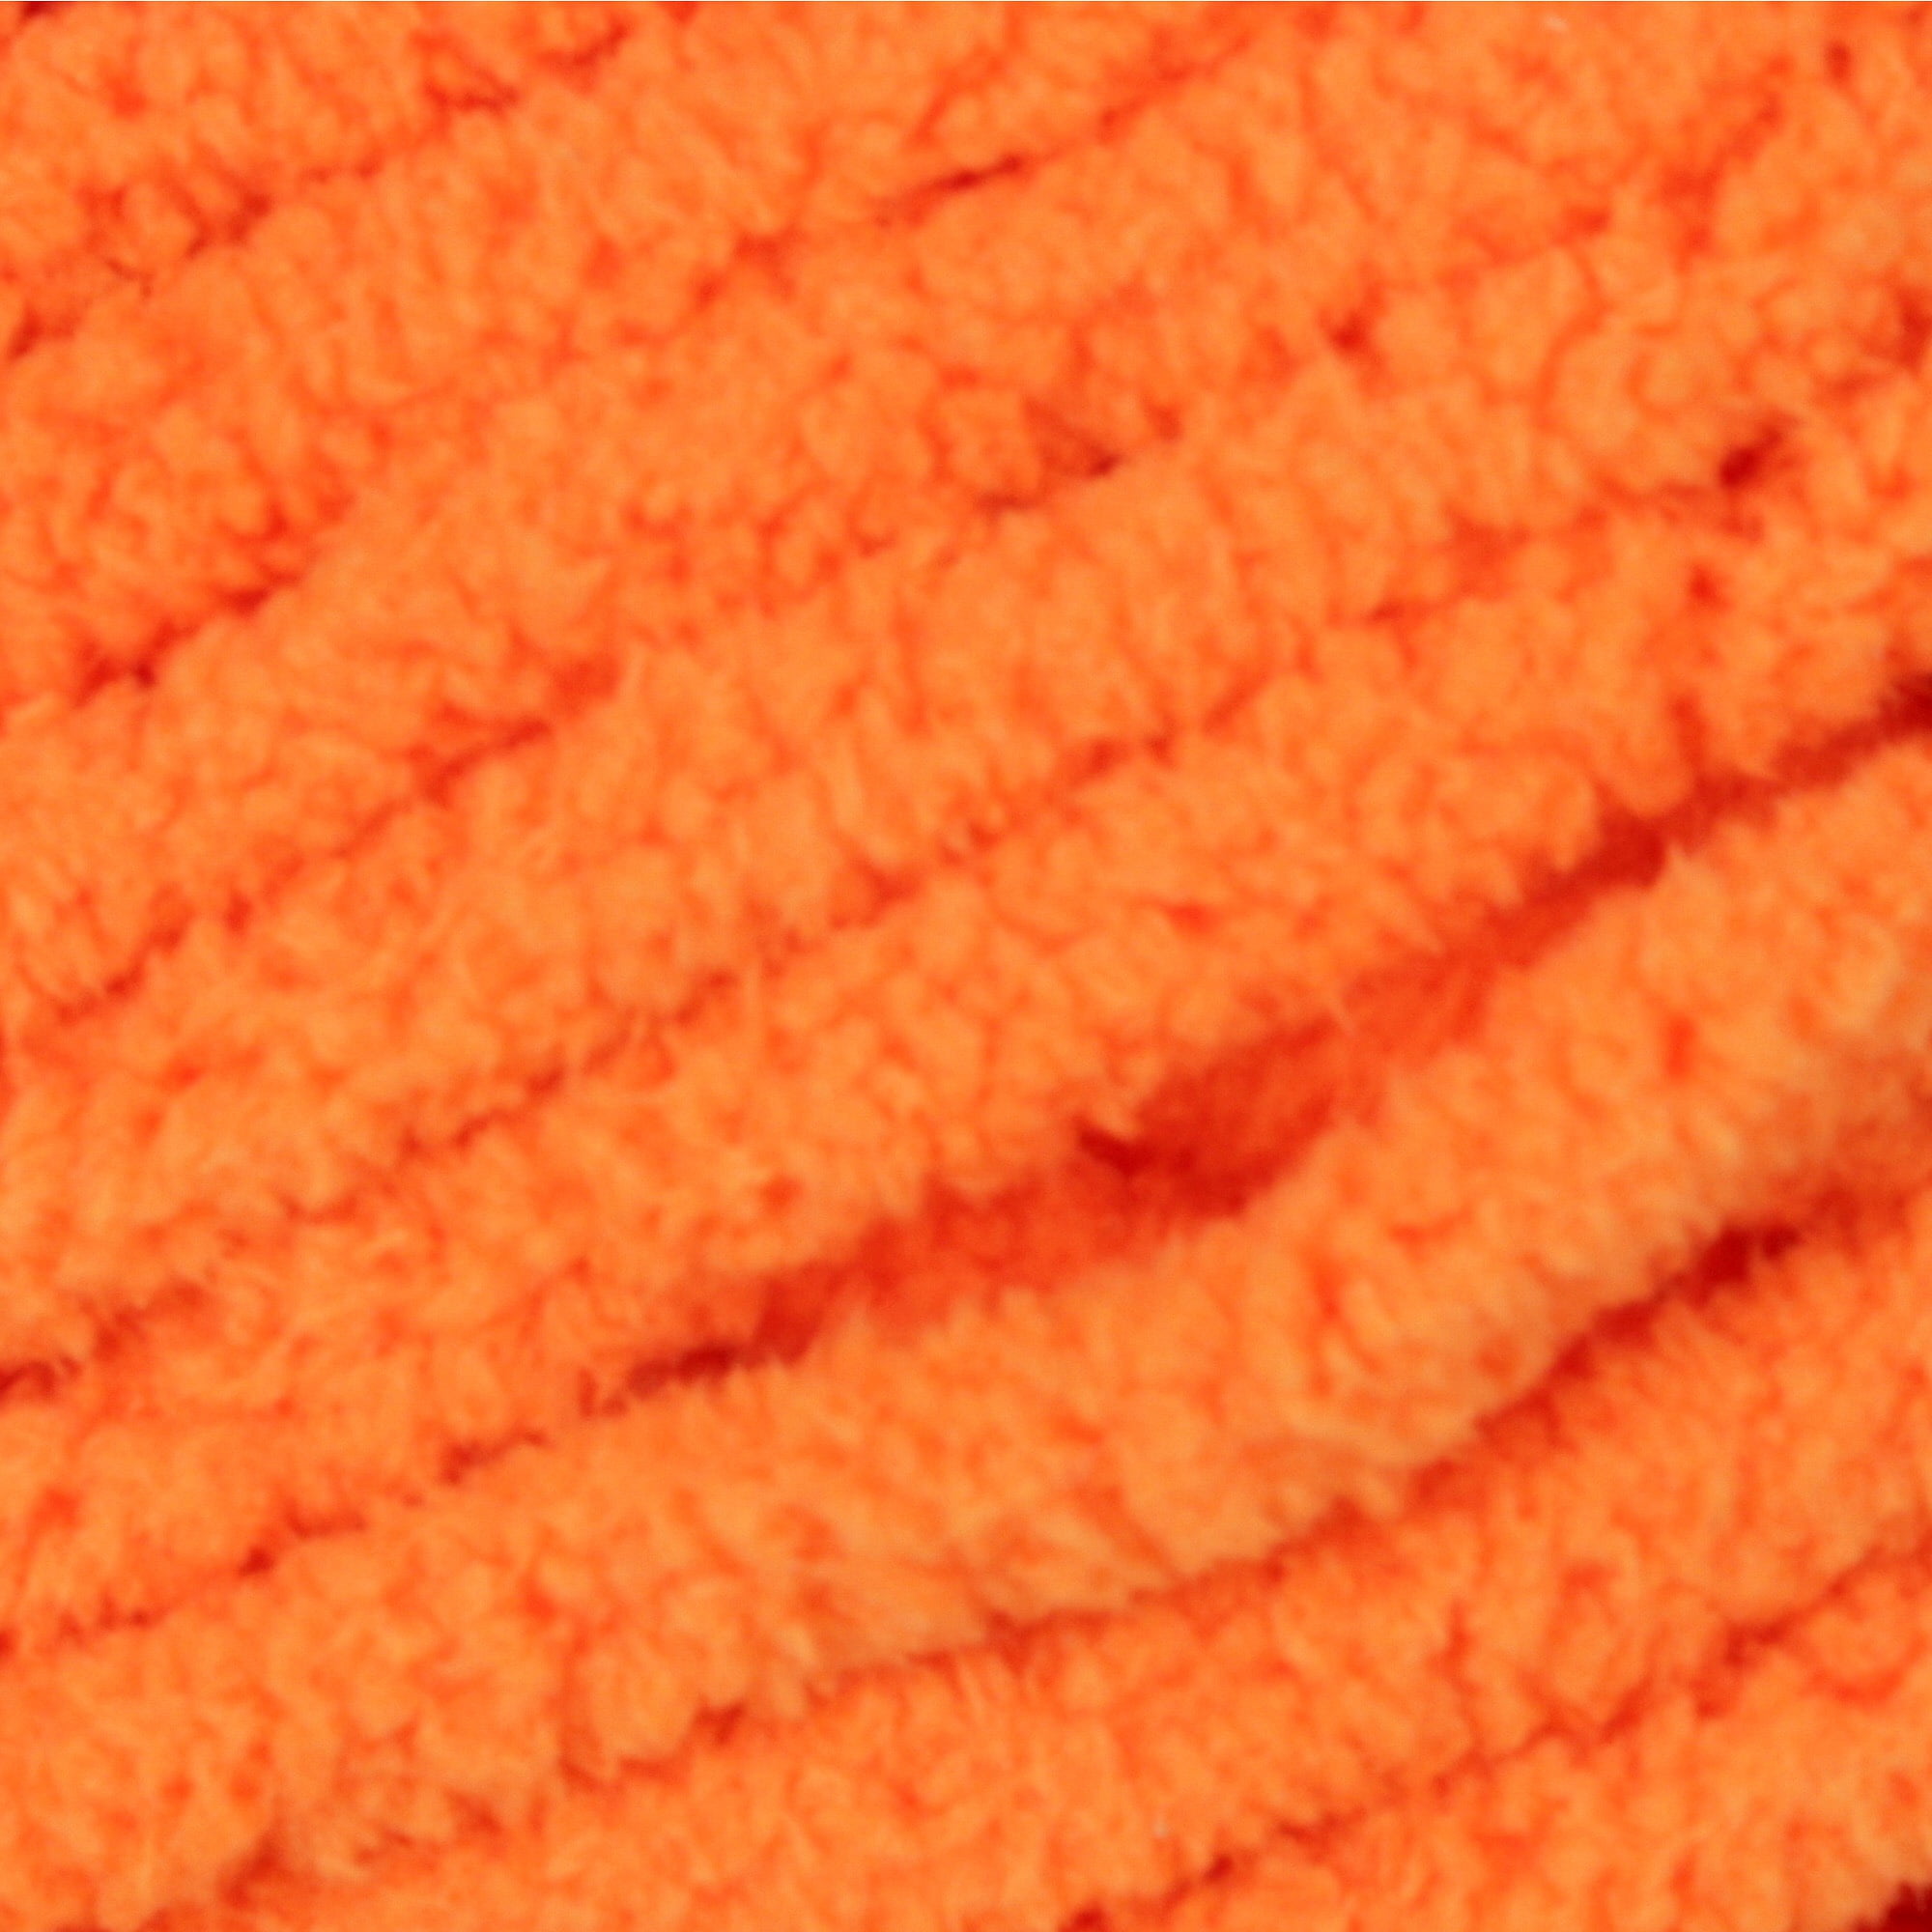 Bernat Blanket Brights Big Ball Yarn-Raspberry Ribbon Variegated, 1 count -  Pick 'n Save